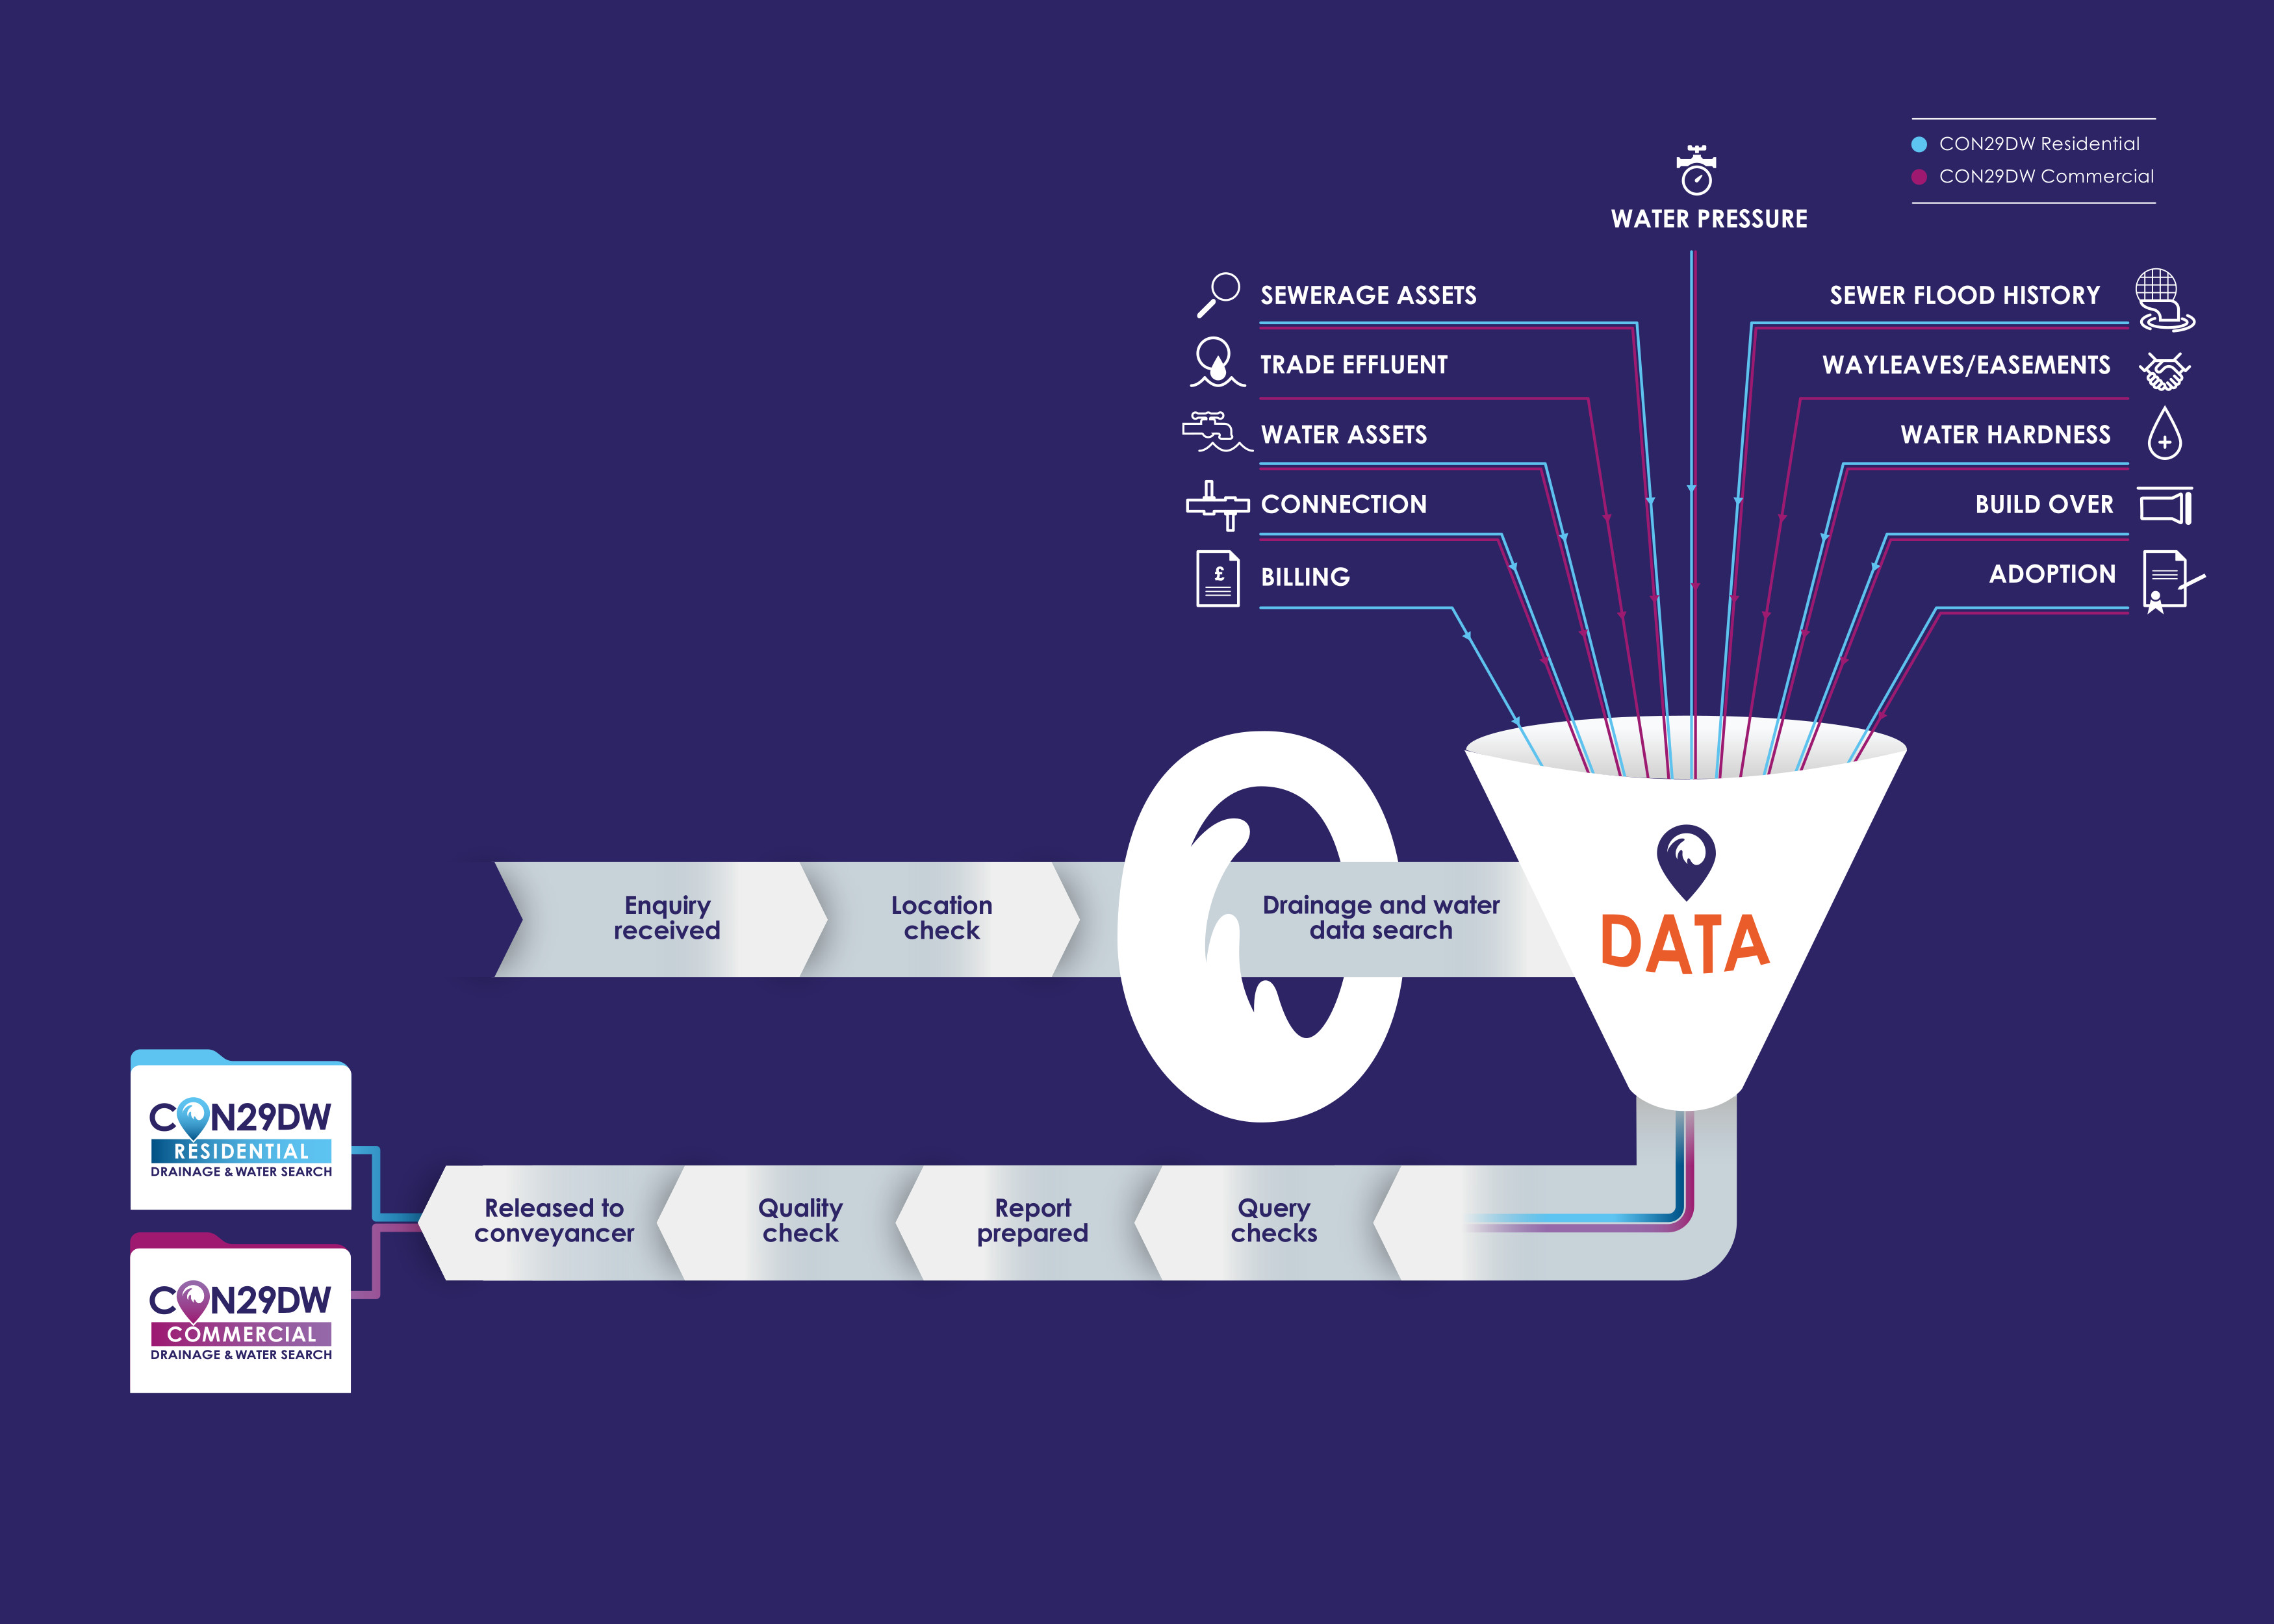 CON29DW data process infographic